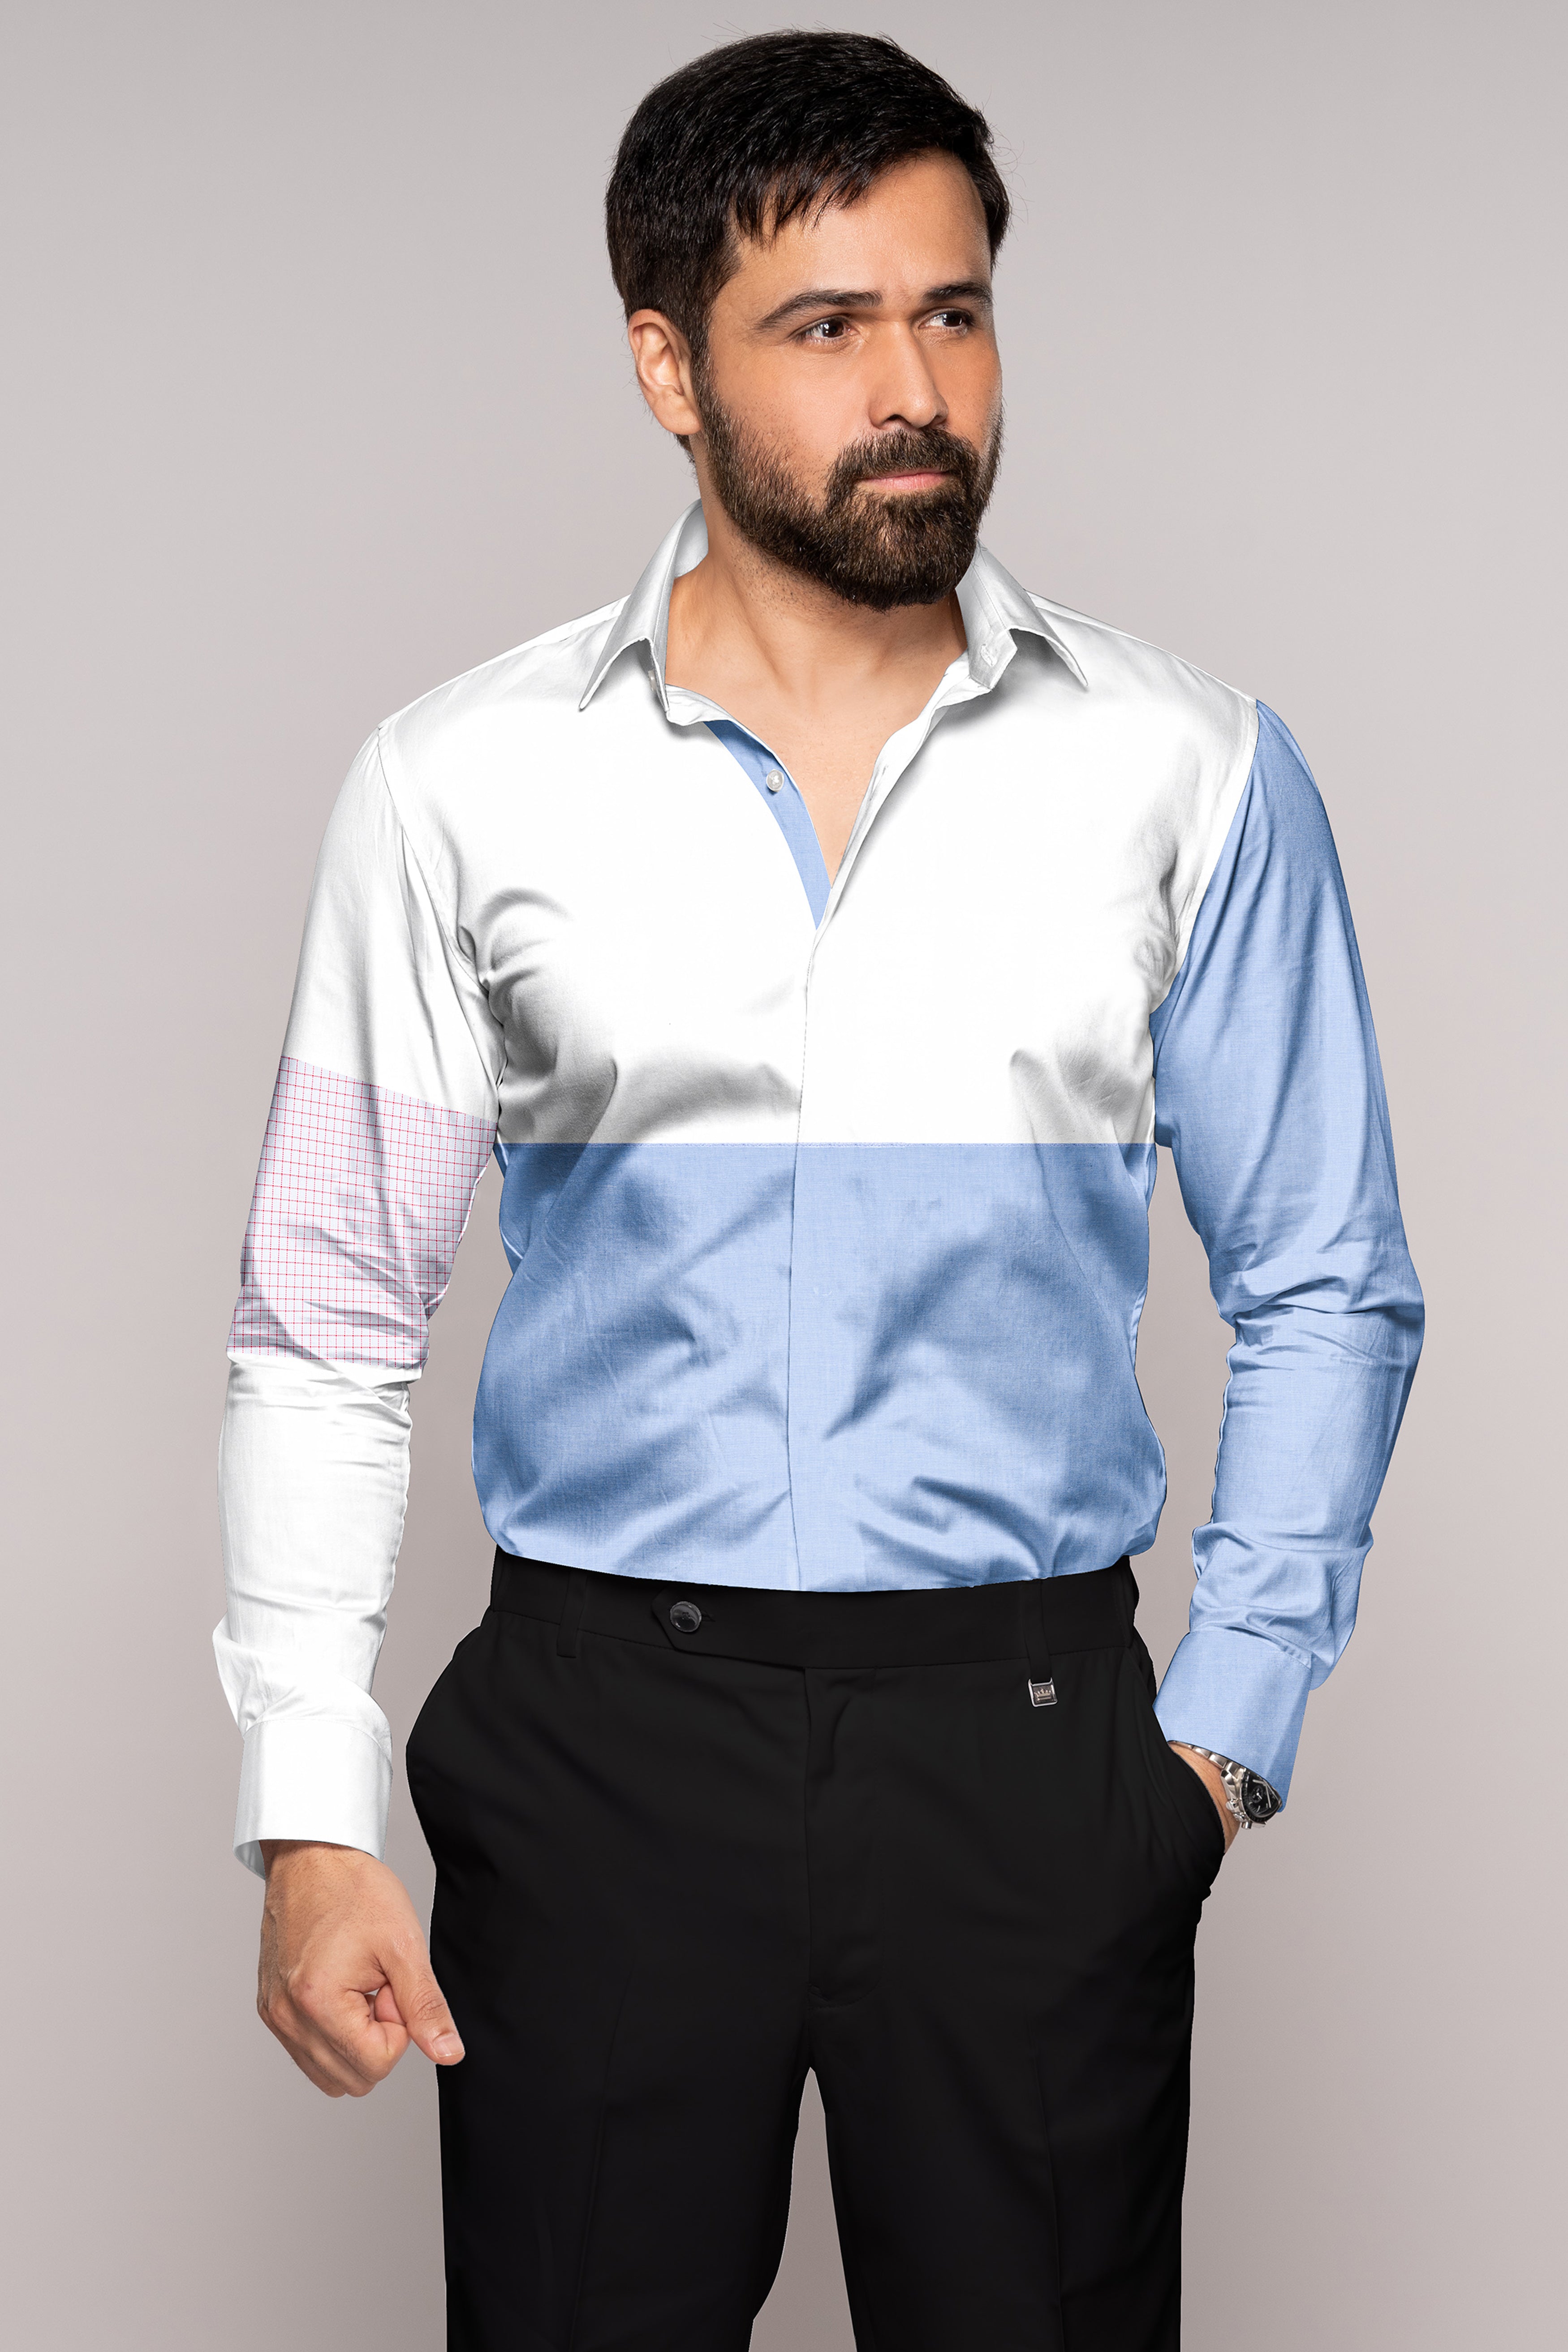 Perano Blue and White Premium Cotton Designer Shirt